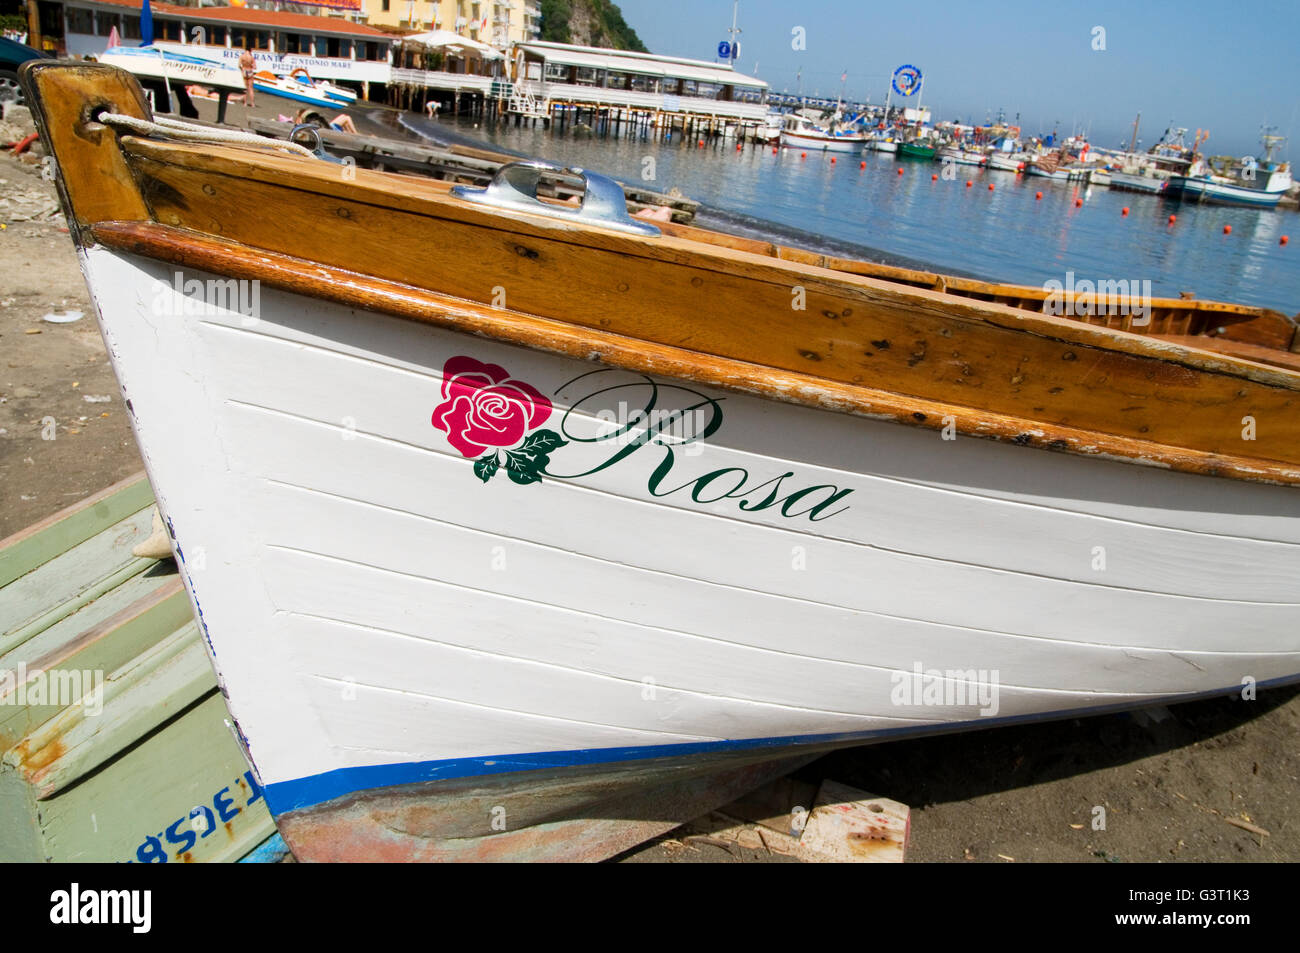 The beautifully painted boat Rosa drawn up on the beach at Sorrento, near Naples, Italy Stock Photo